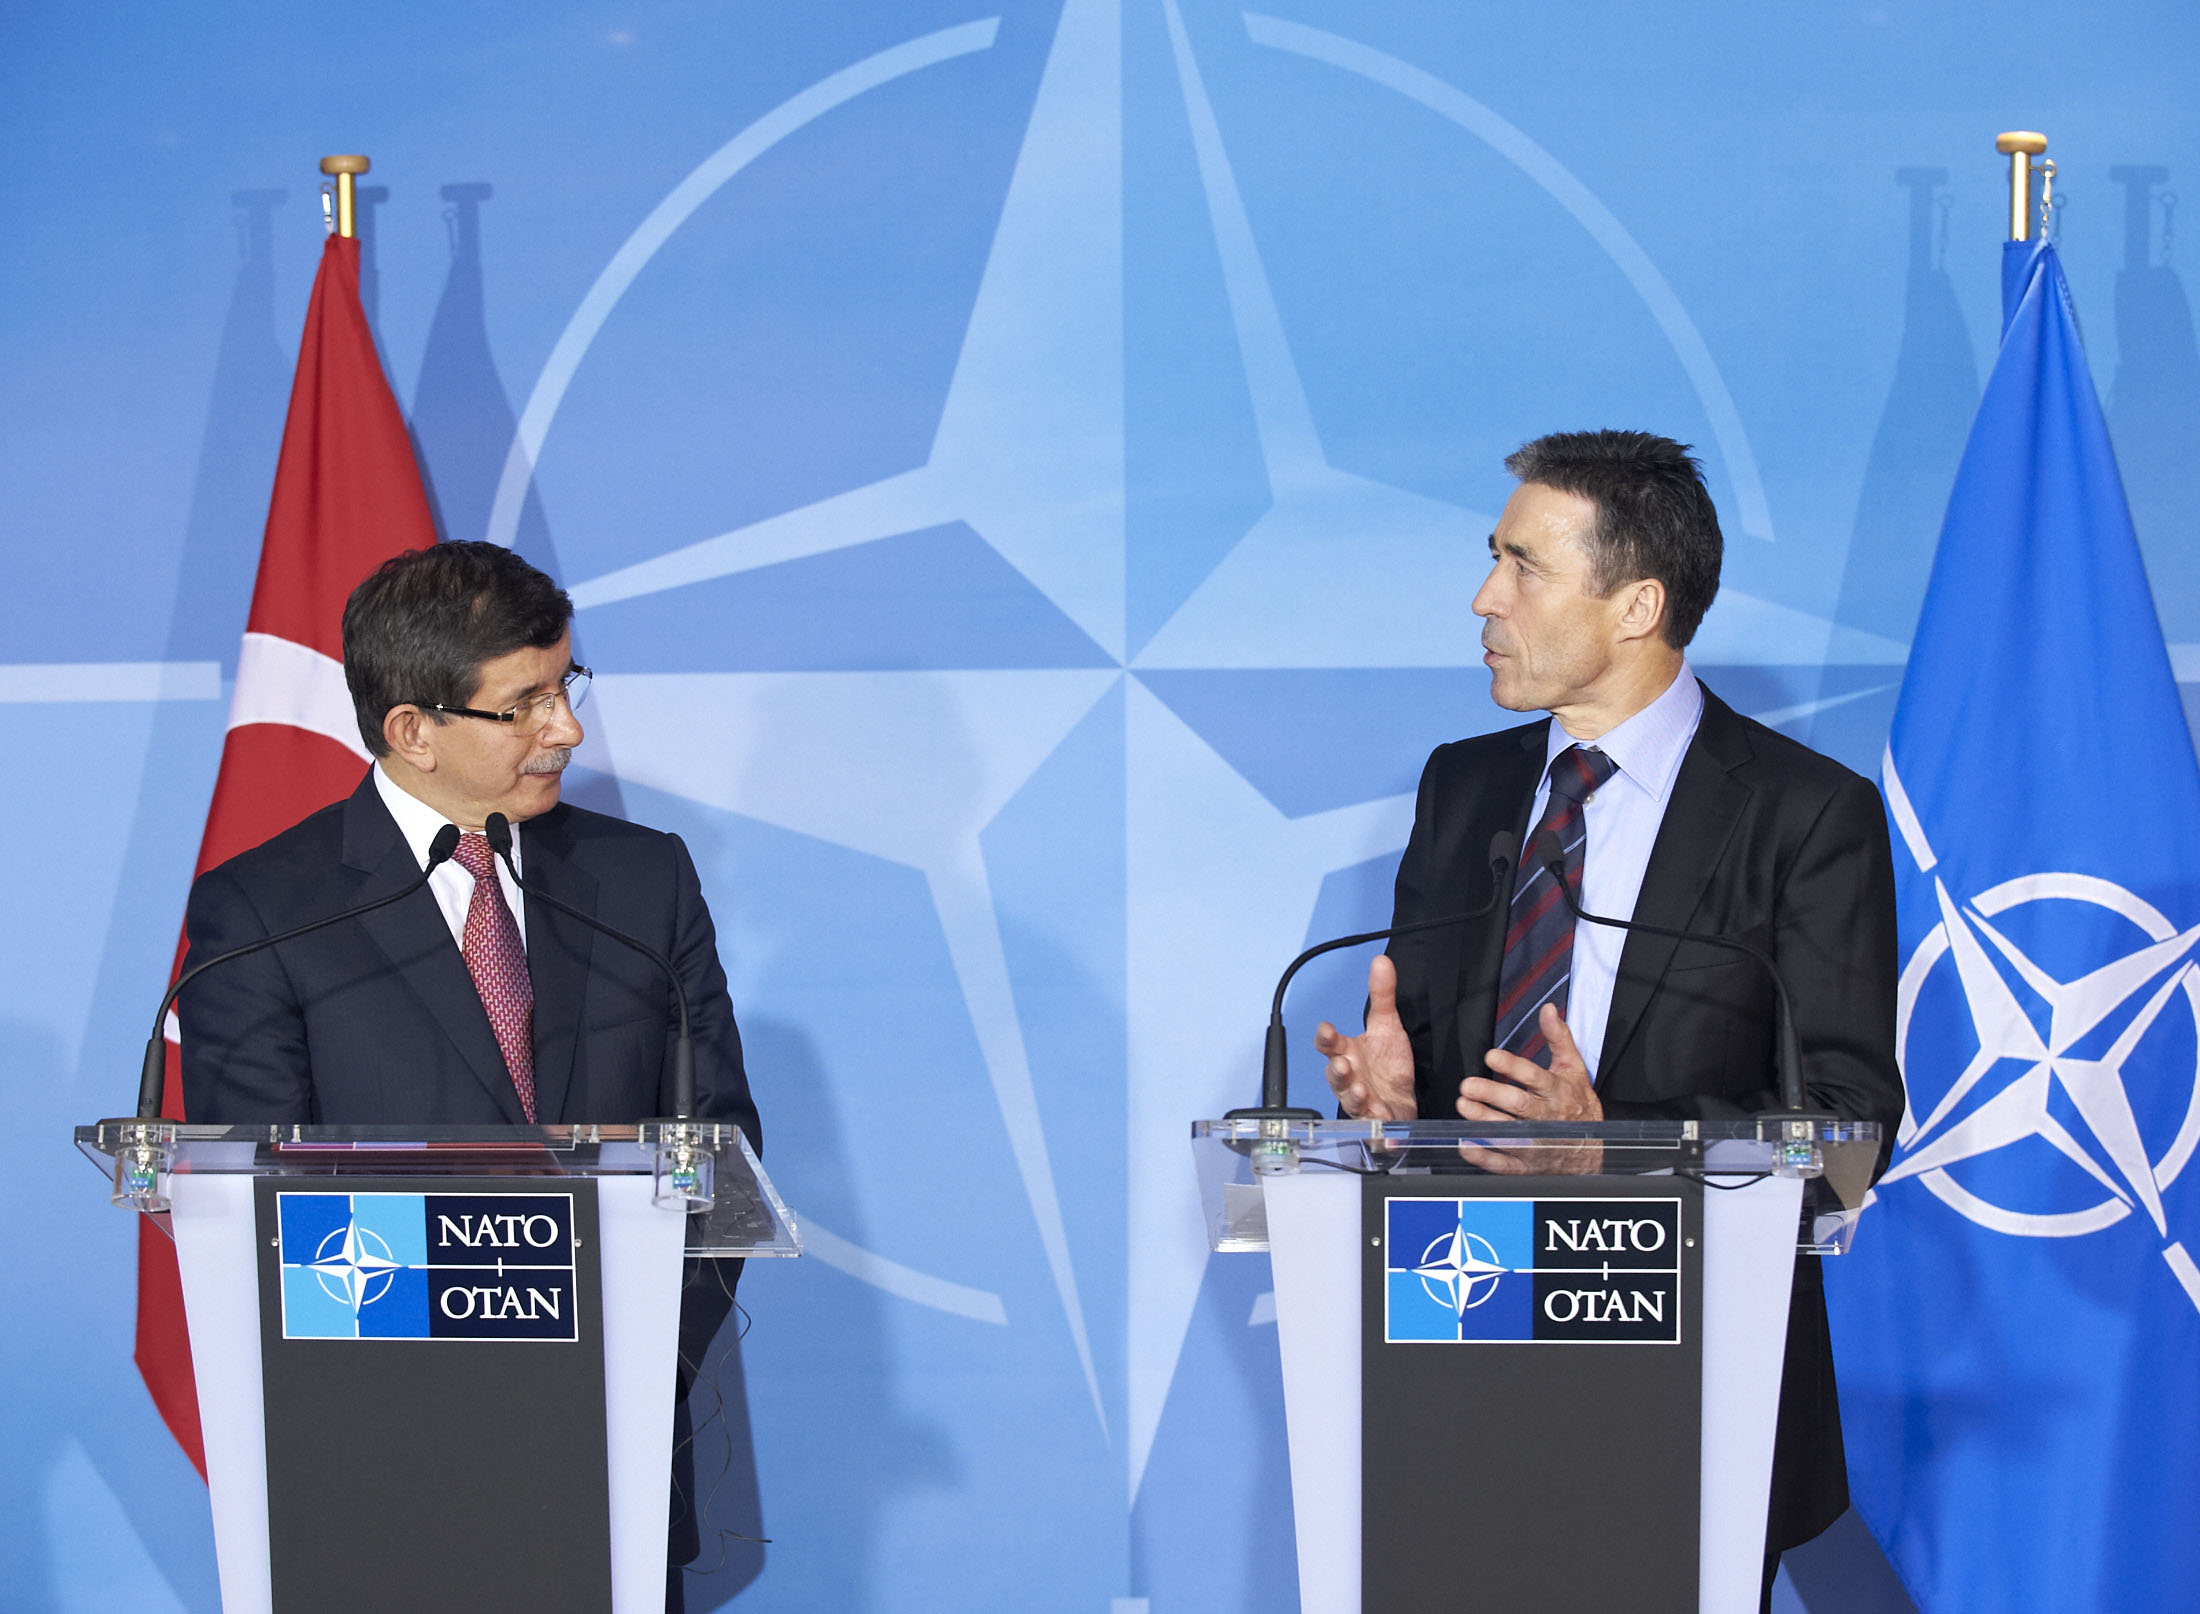 Foreign Minister of Turkey Ahmet Davutoglu and NATO Secretary General Anders Fogh Rasmussen